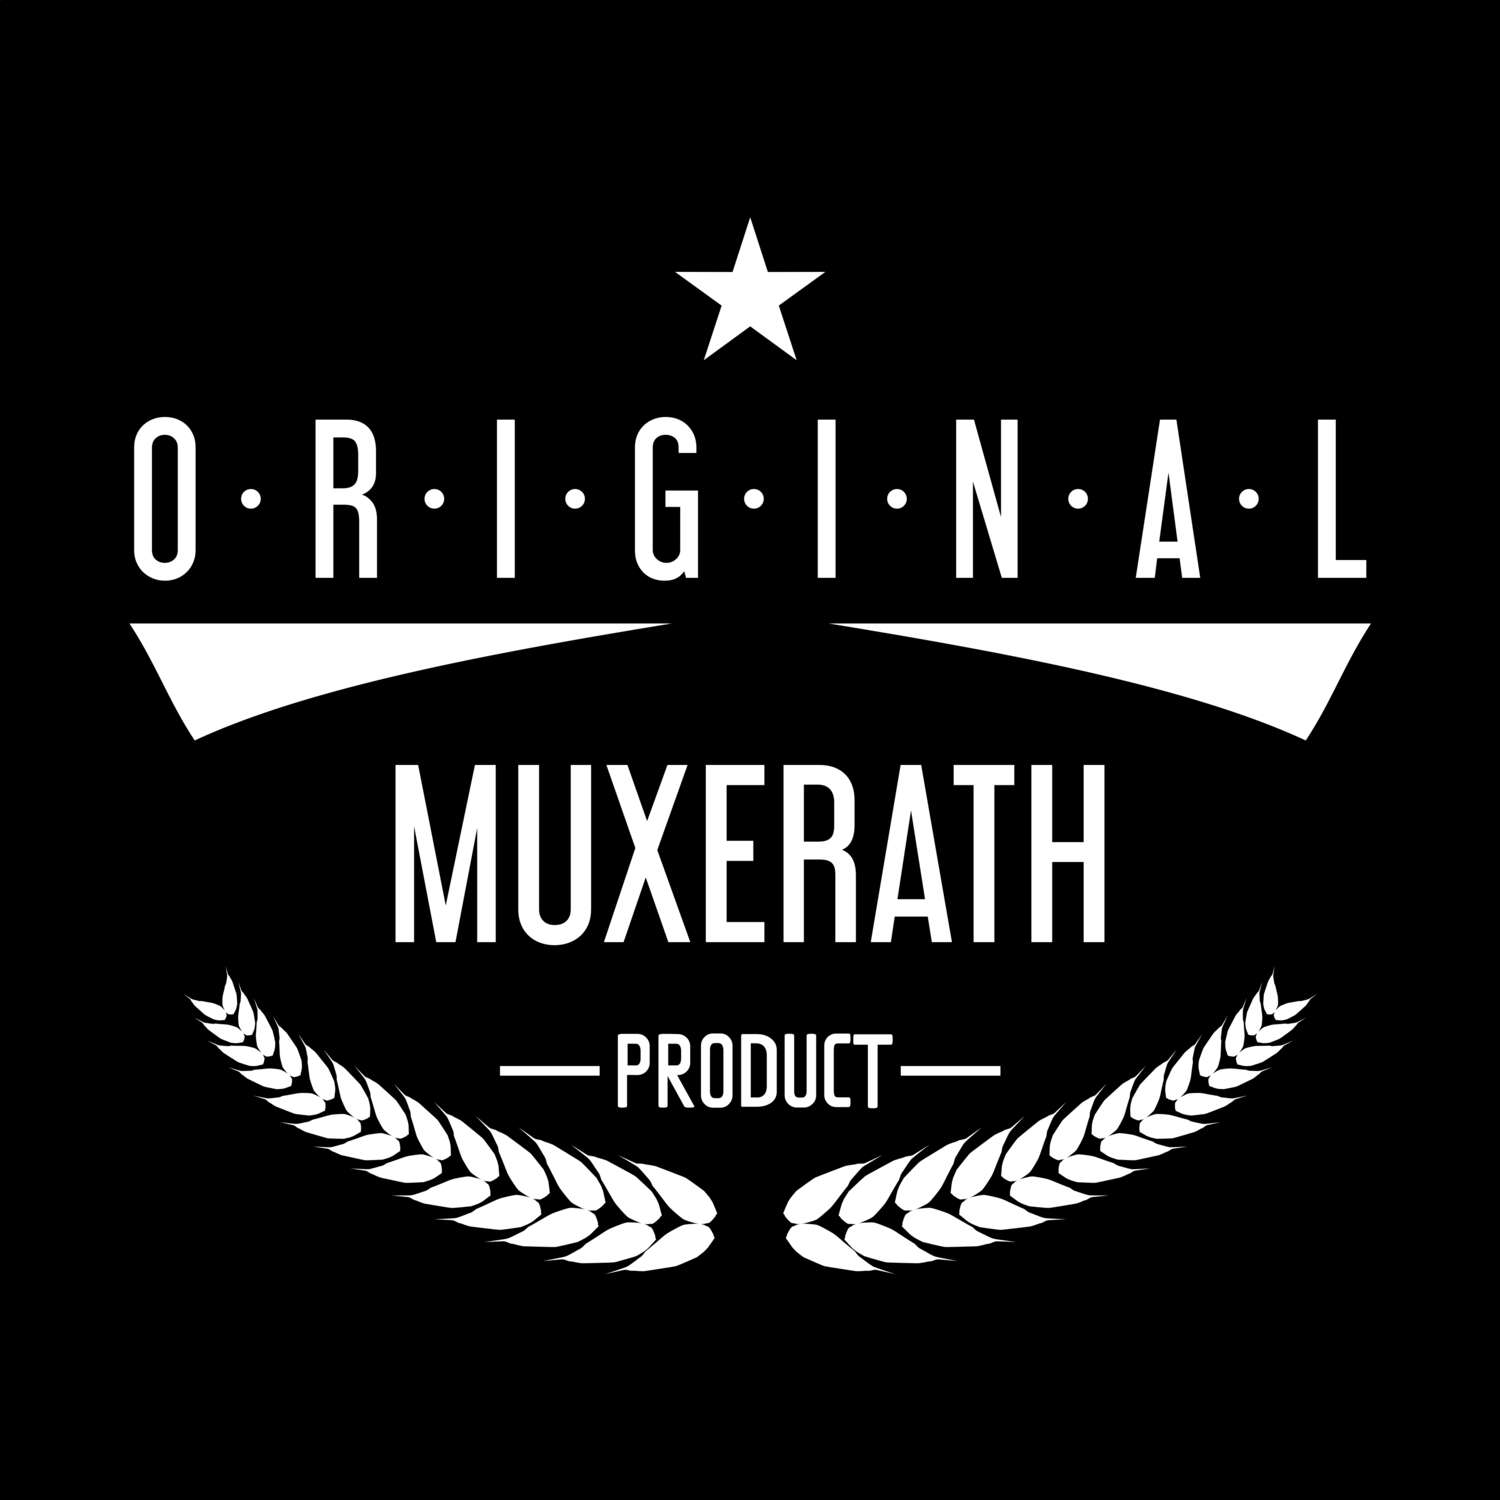 Muxerath T-Shirt »Original Product«